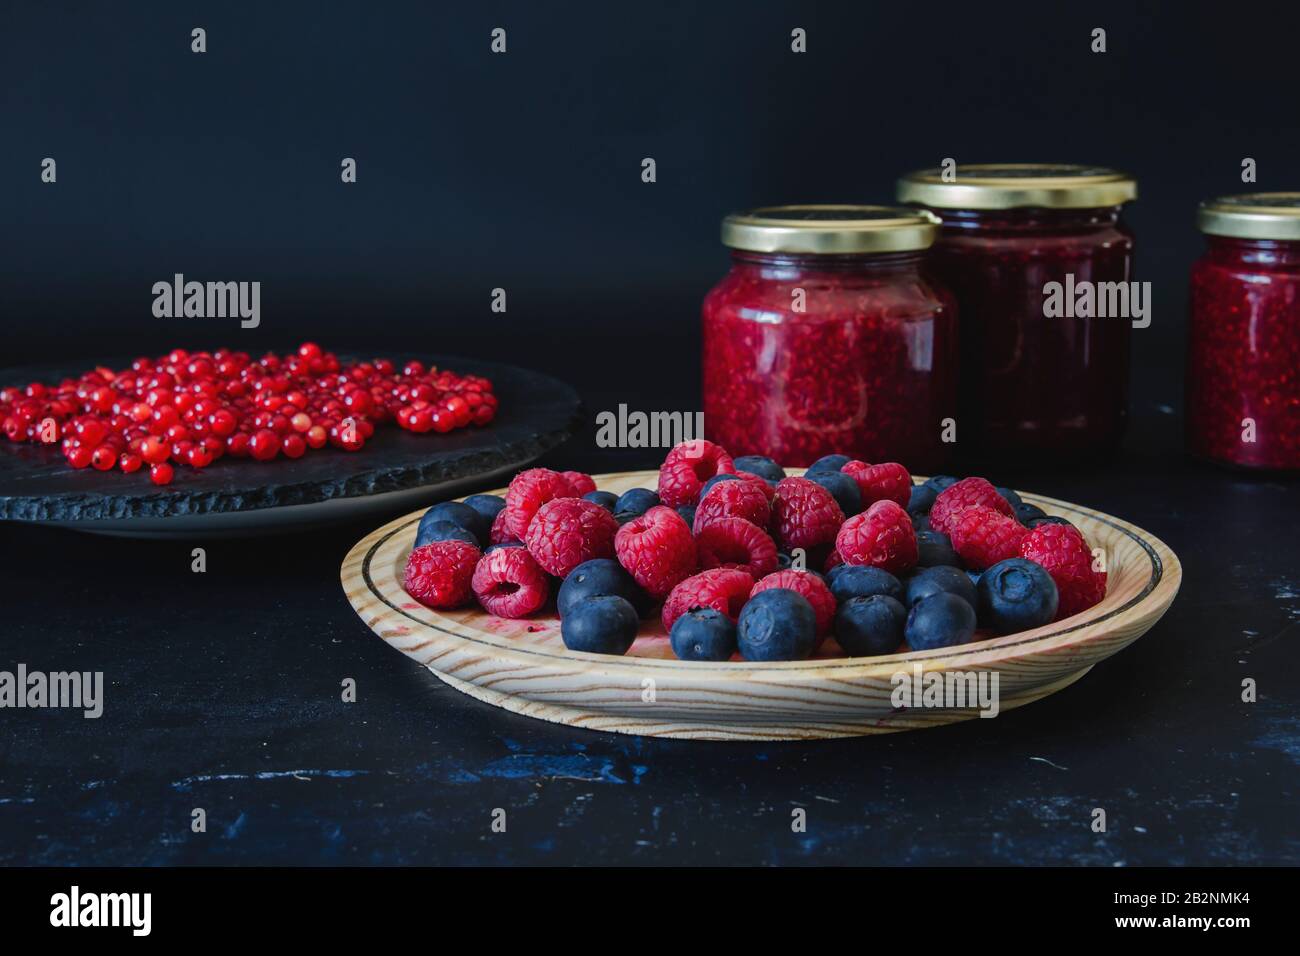 Homemade jam with fresh blueberries, raspberries and redcurrants, dark backdrop Stock Photo